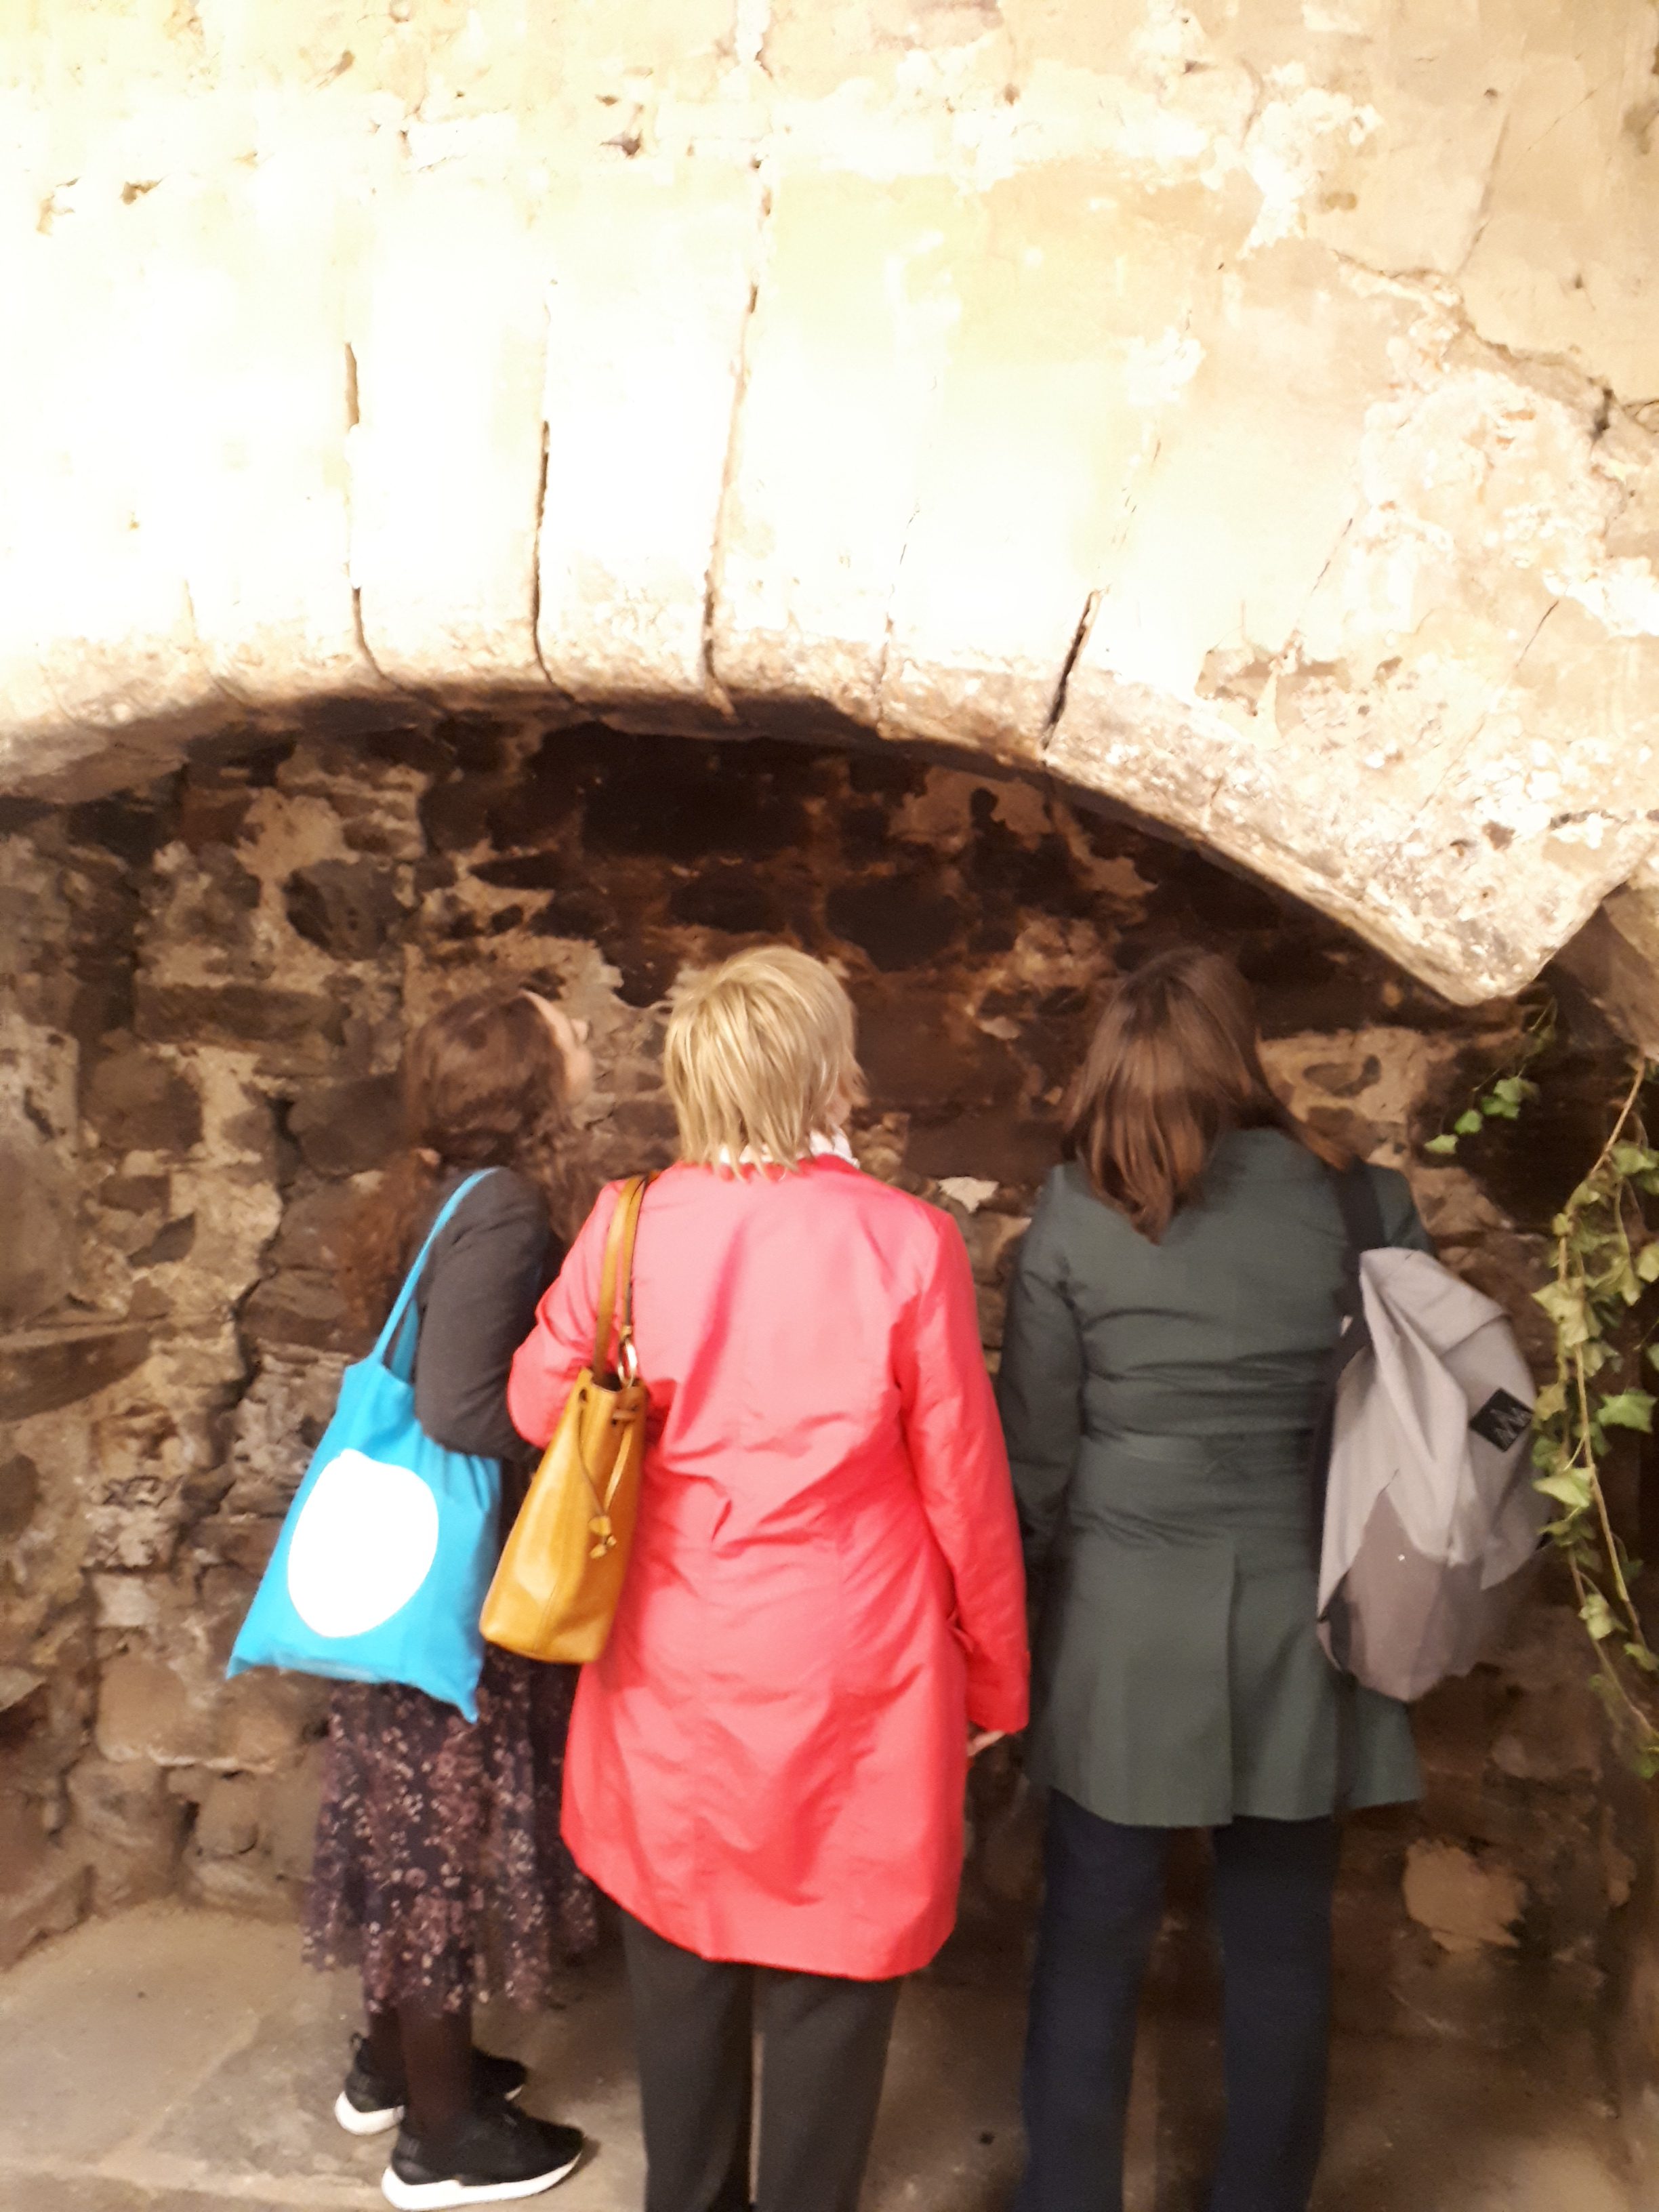 Three women look at a brick wall. We just see their backs.